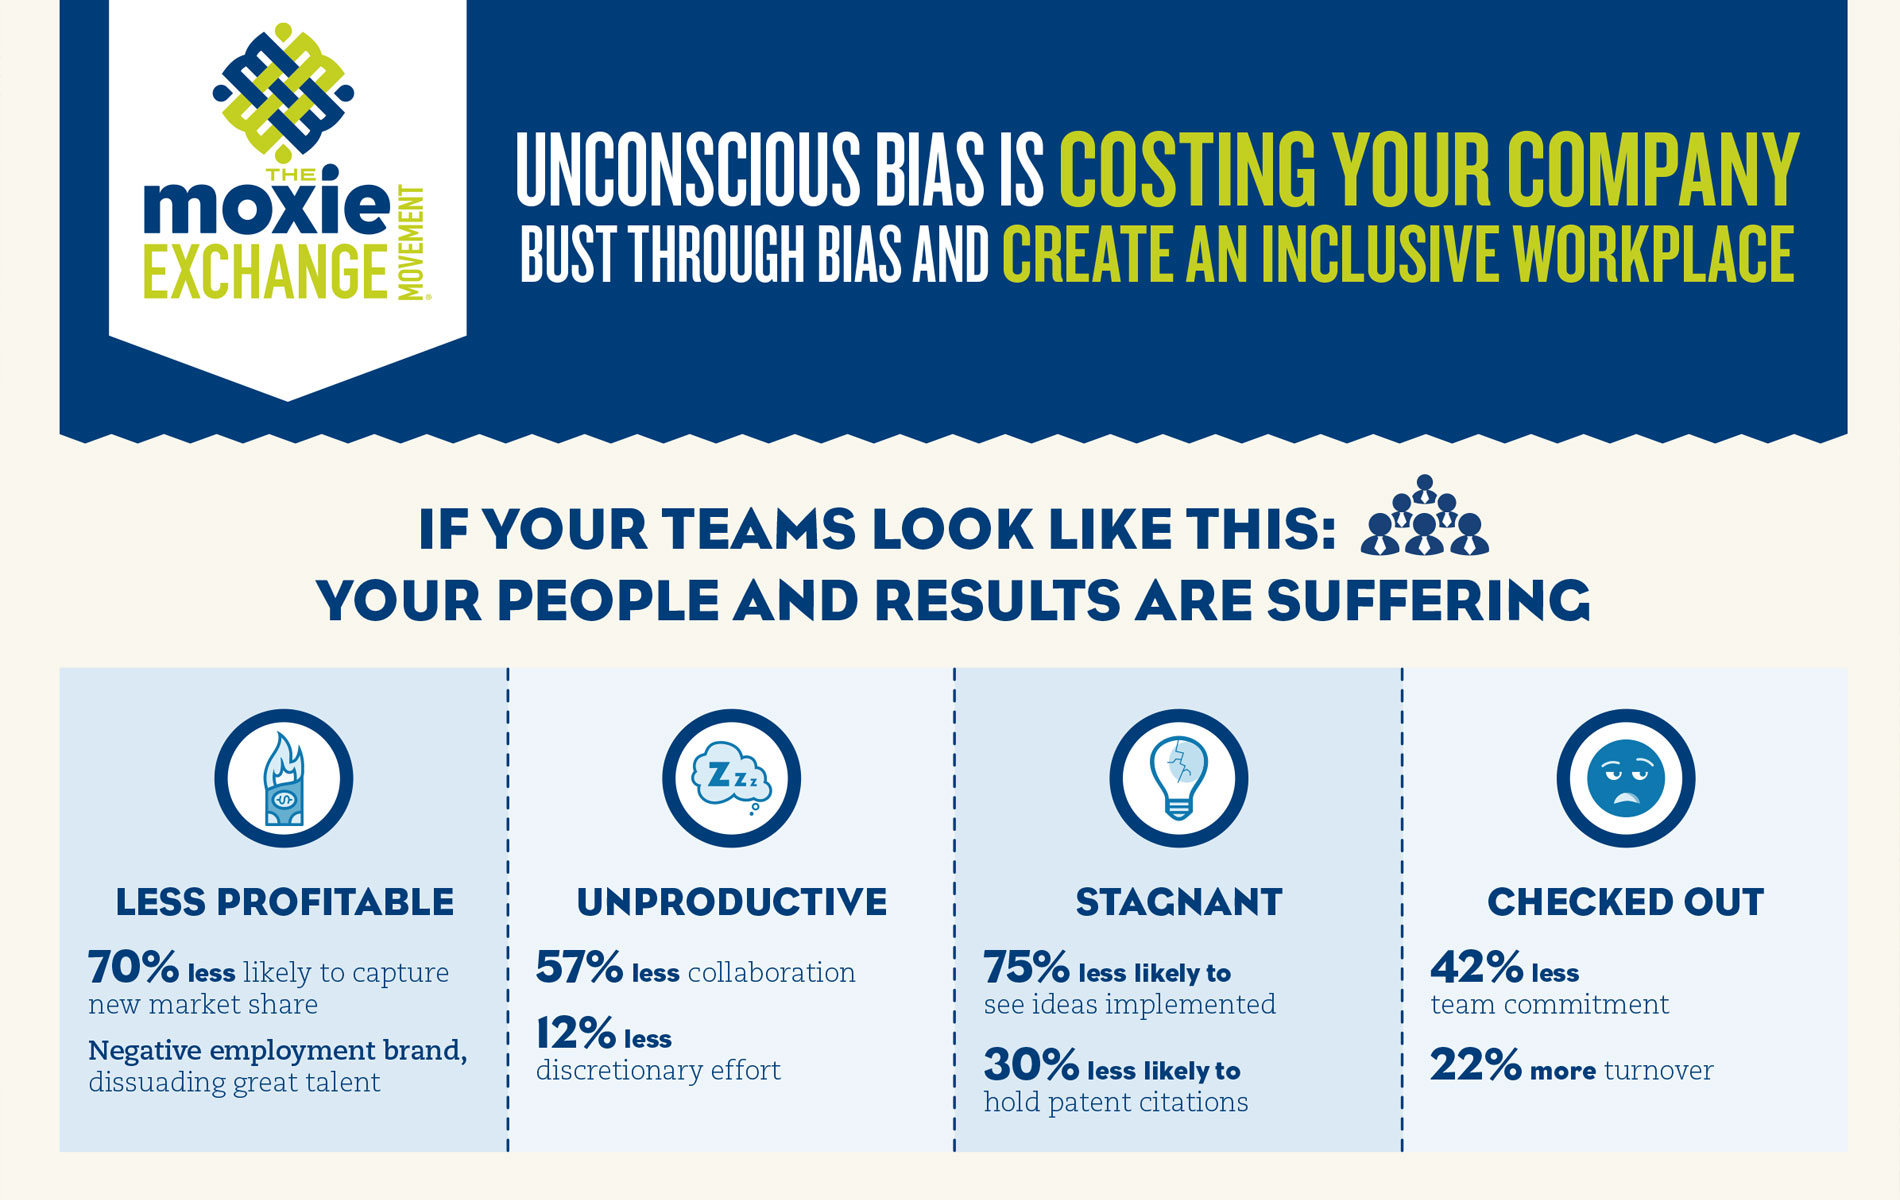 busting unconscious bias